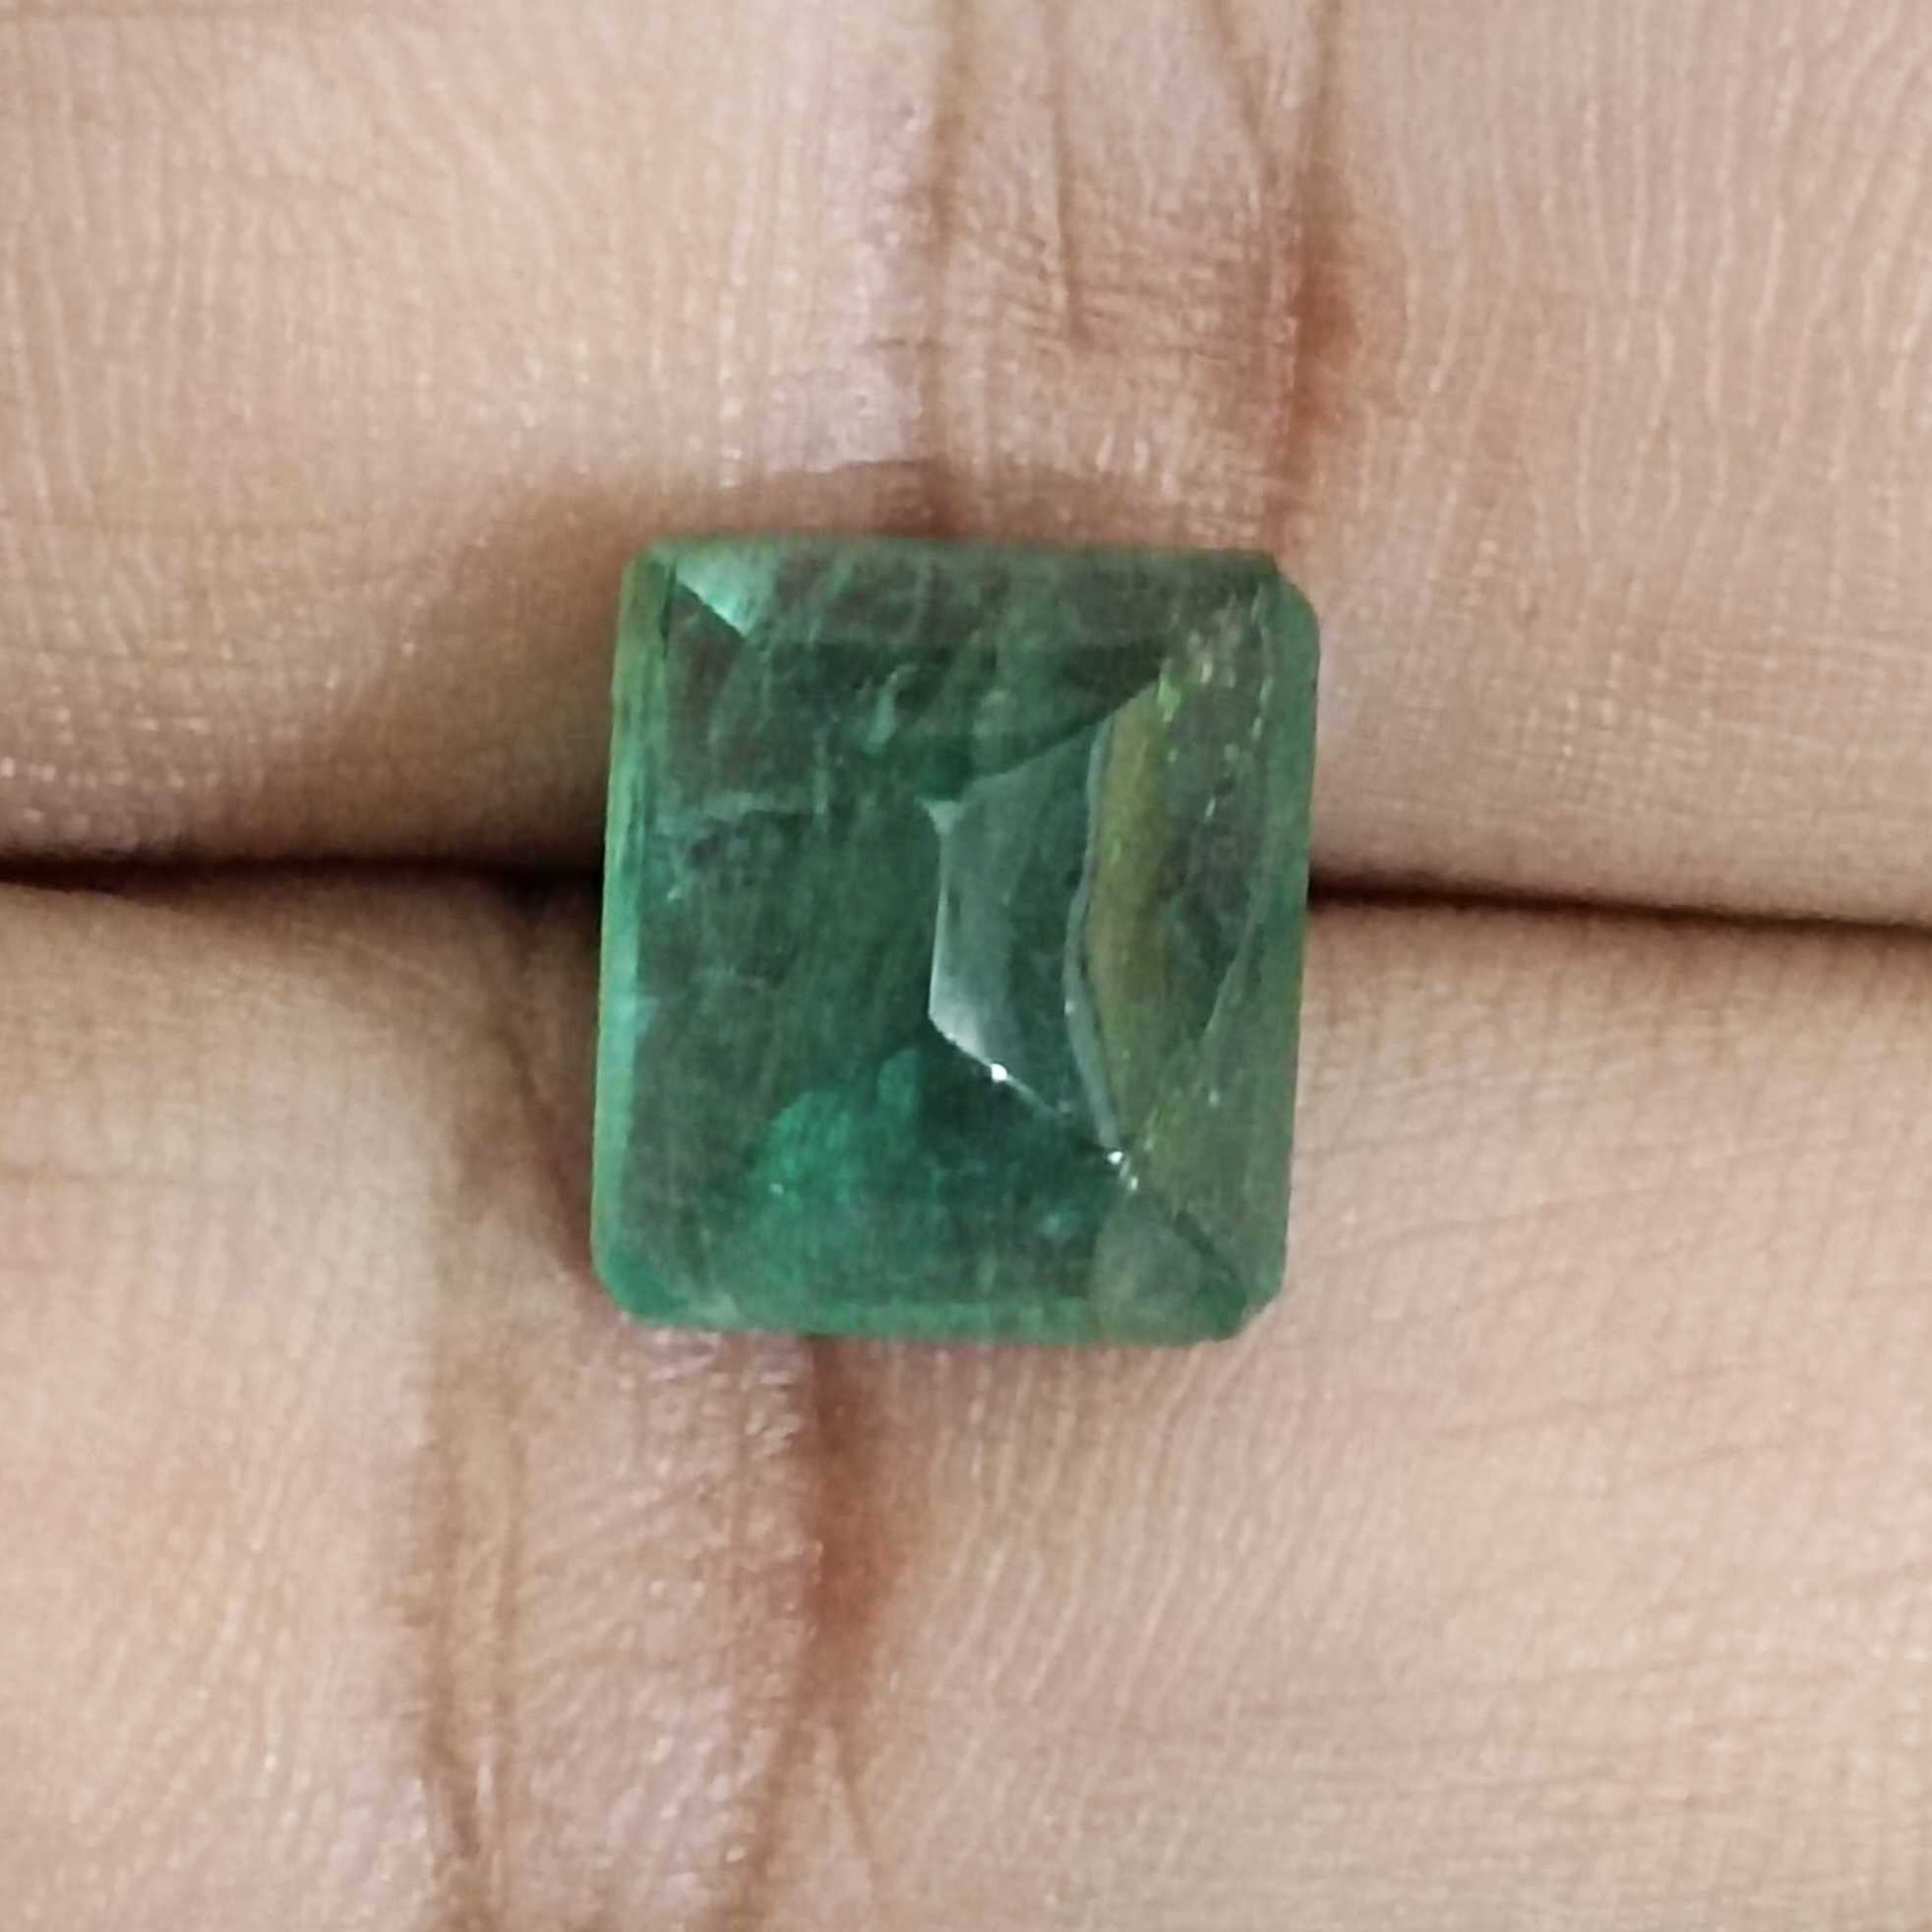 6.36ct deep green one side faceted emerald sugarloaf gem/